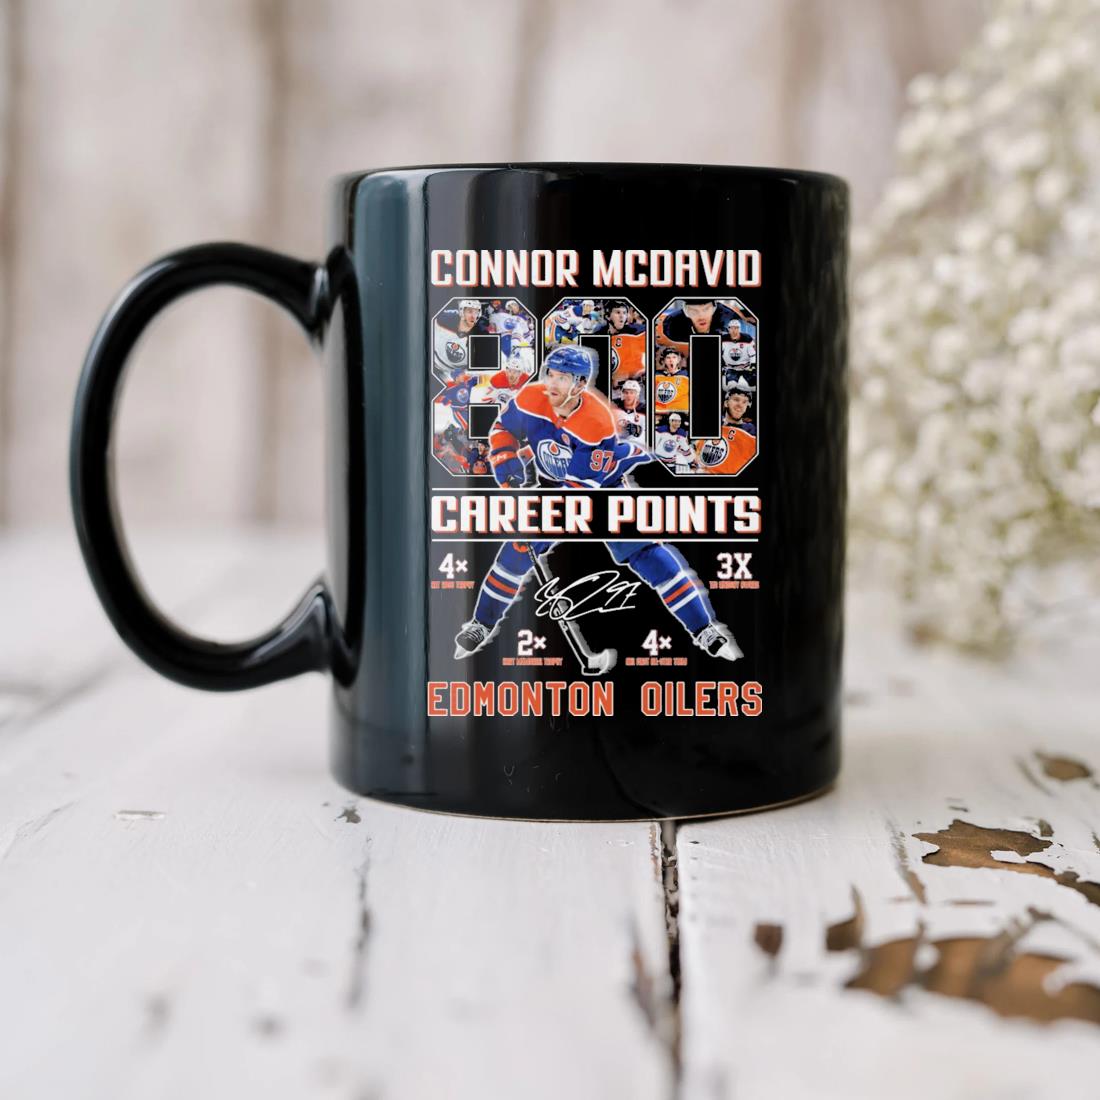 Connor Mcdavid 800 Career Points Edmonton Oilers Signature Mug